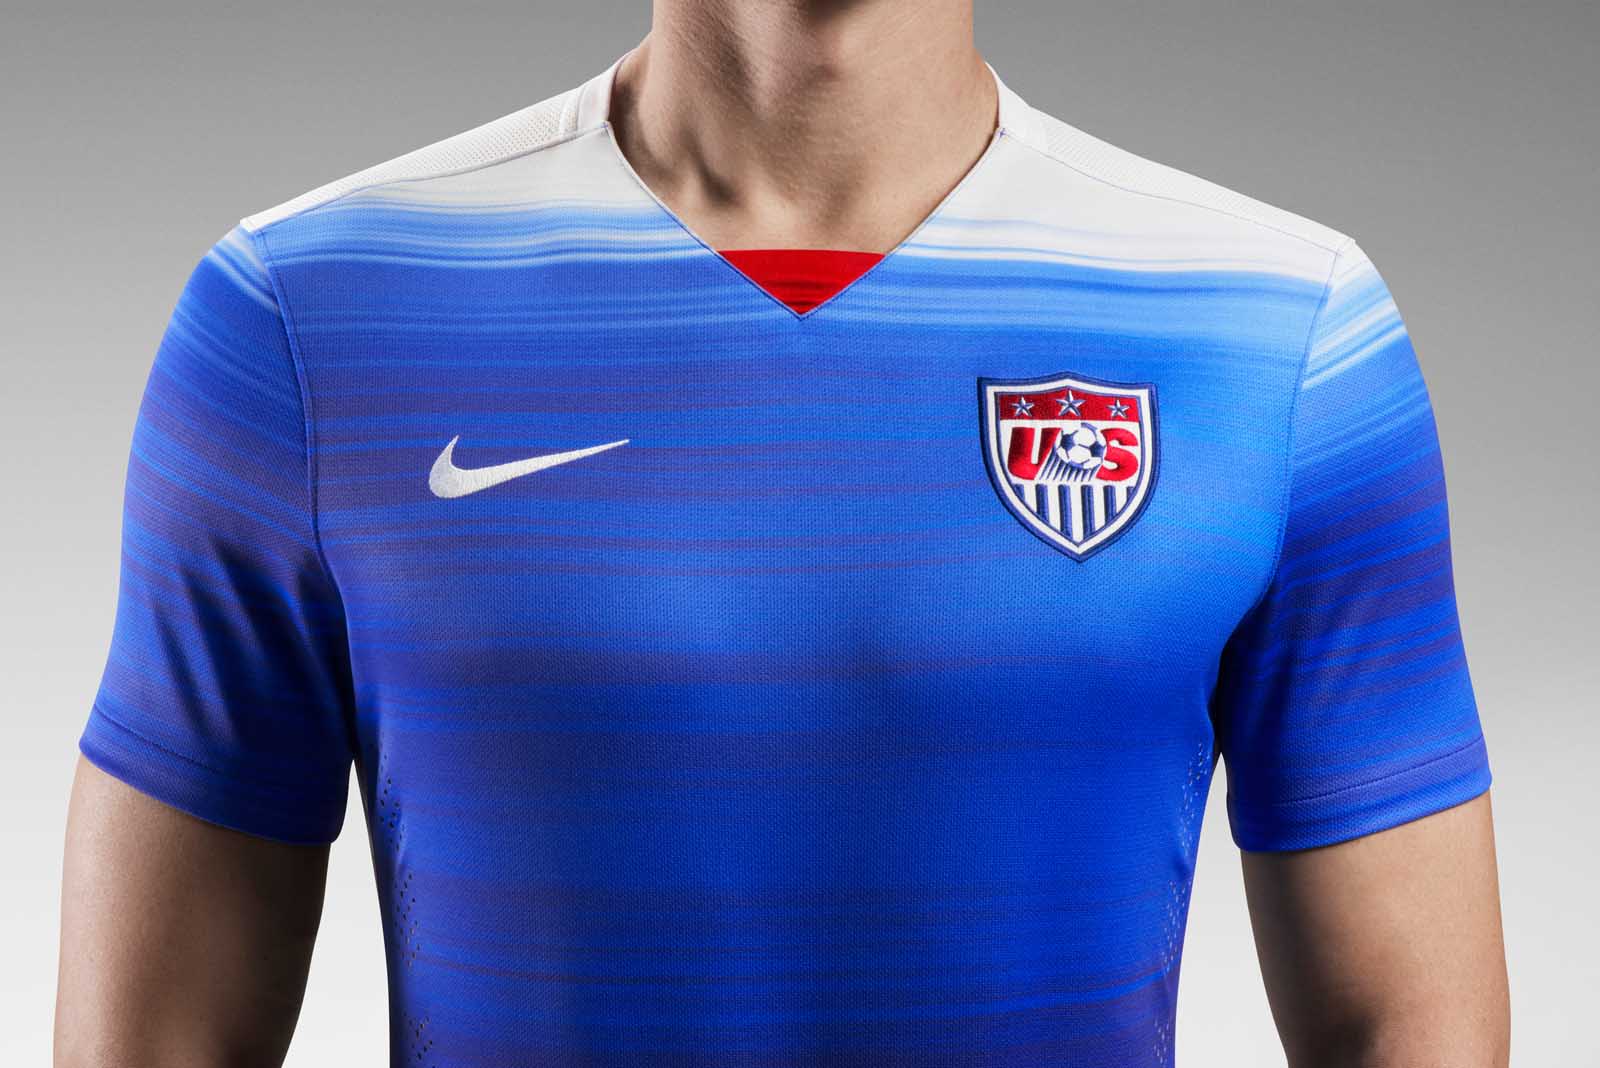 Nike USA 2015 Away Kit Released